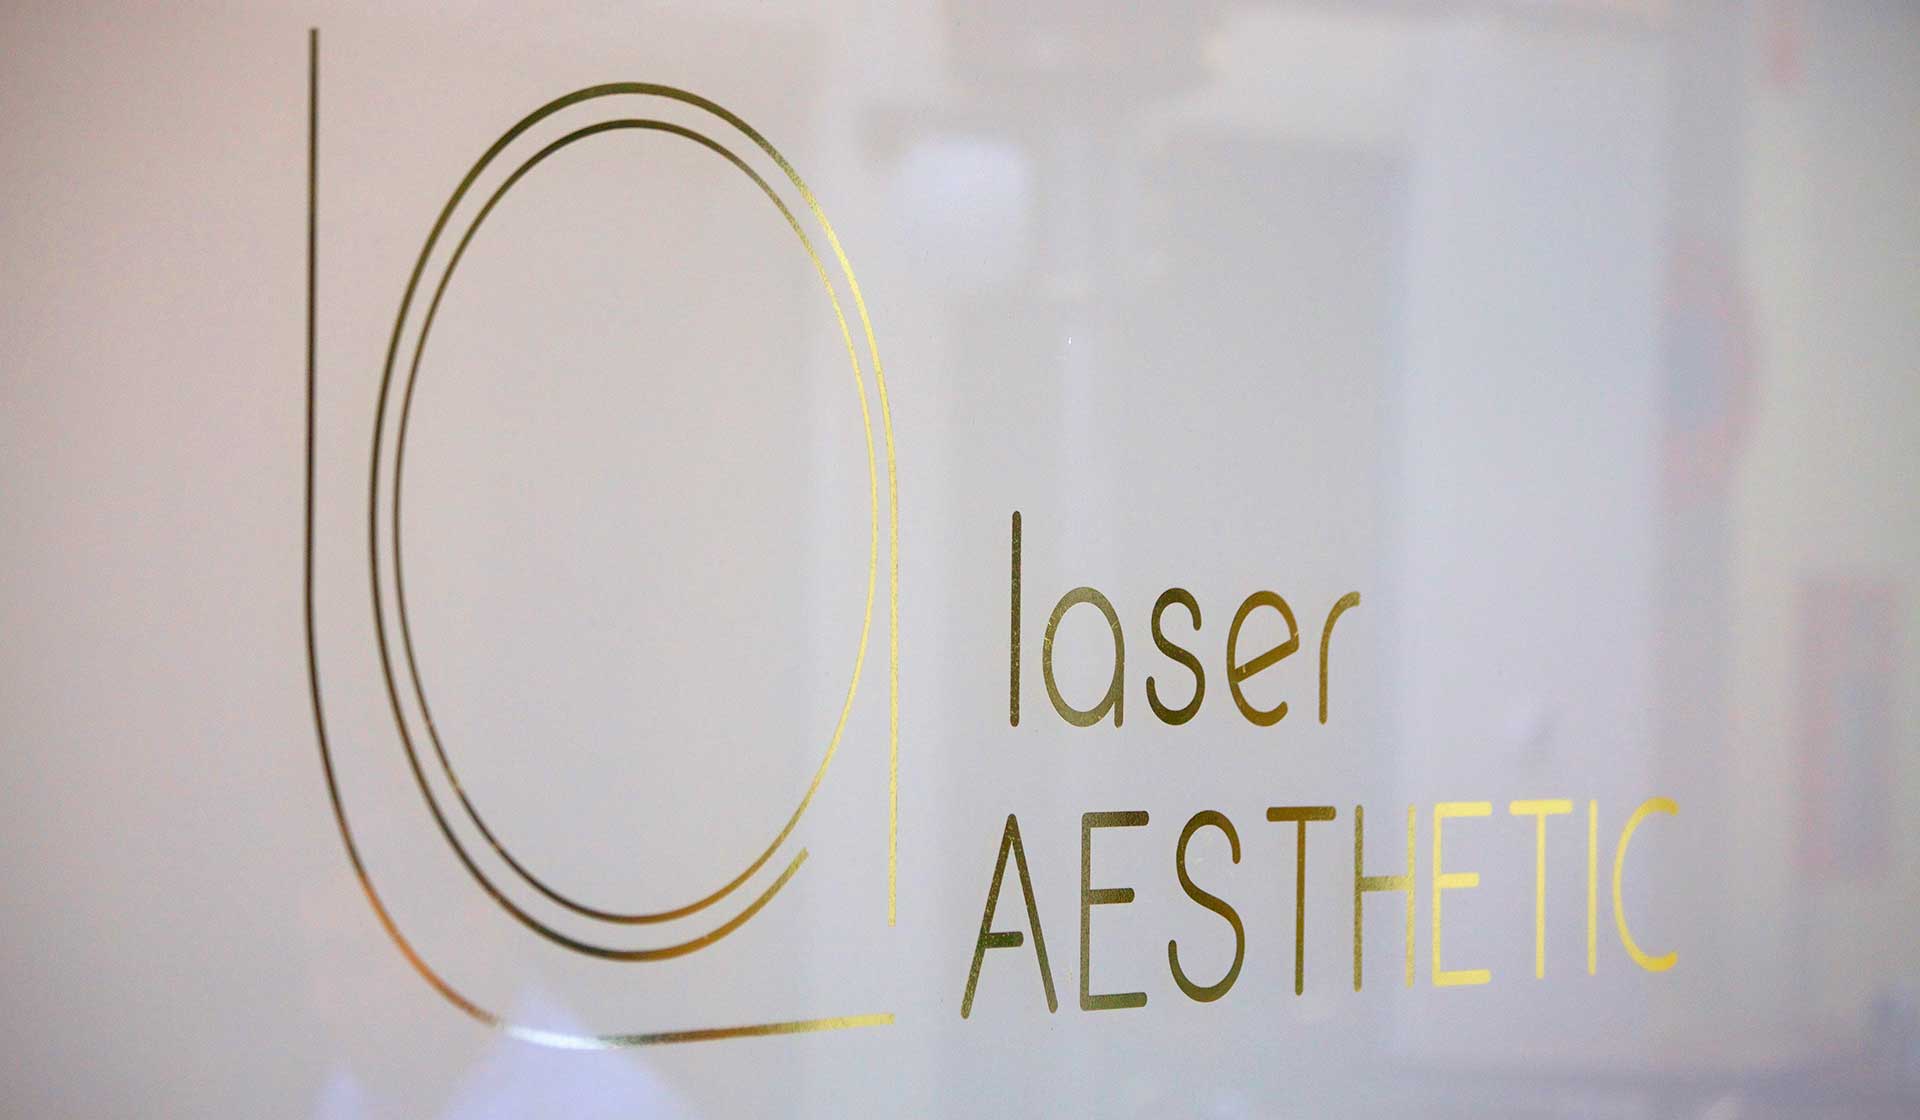 Laser aesthetic salon one